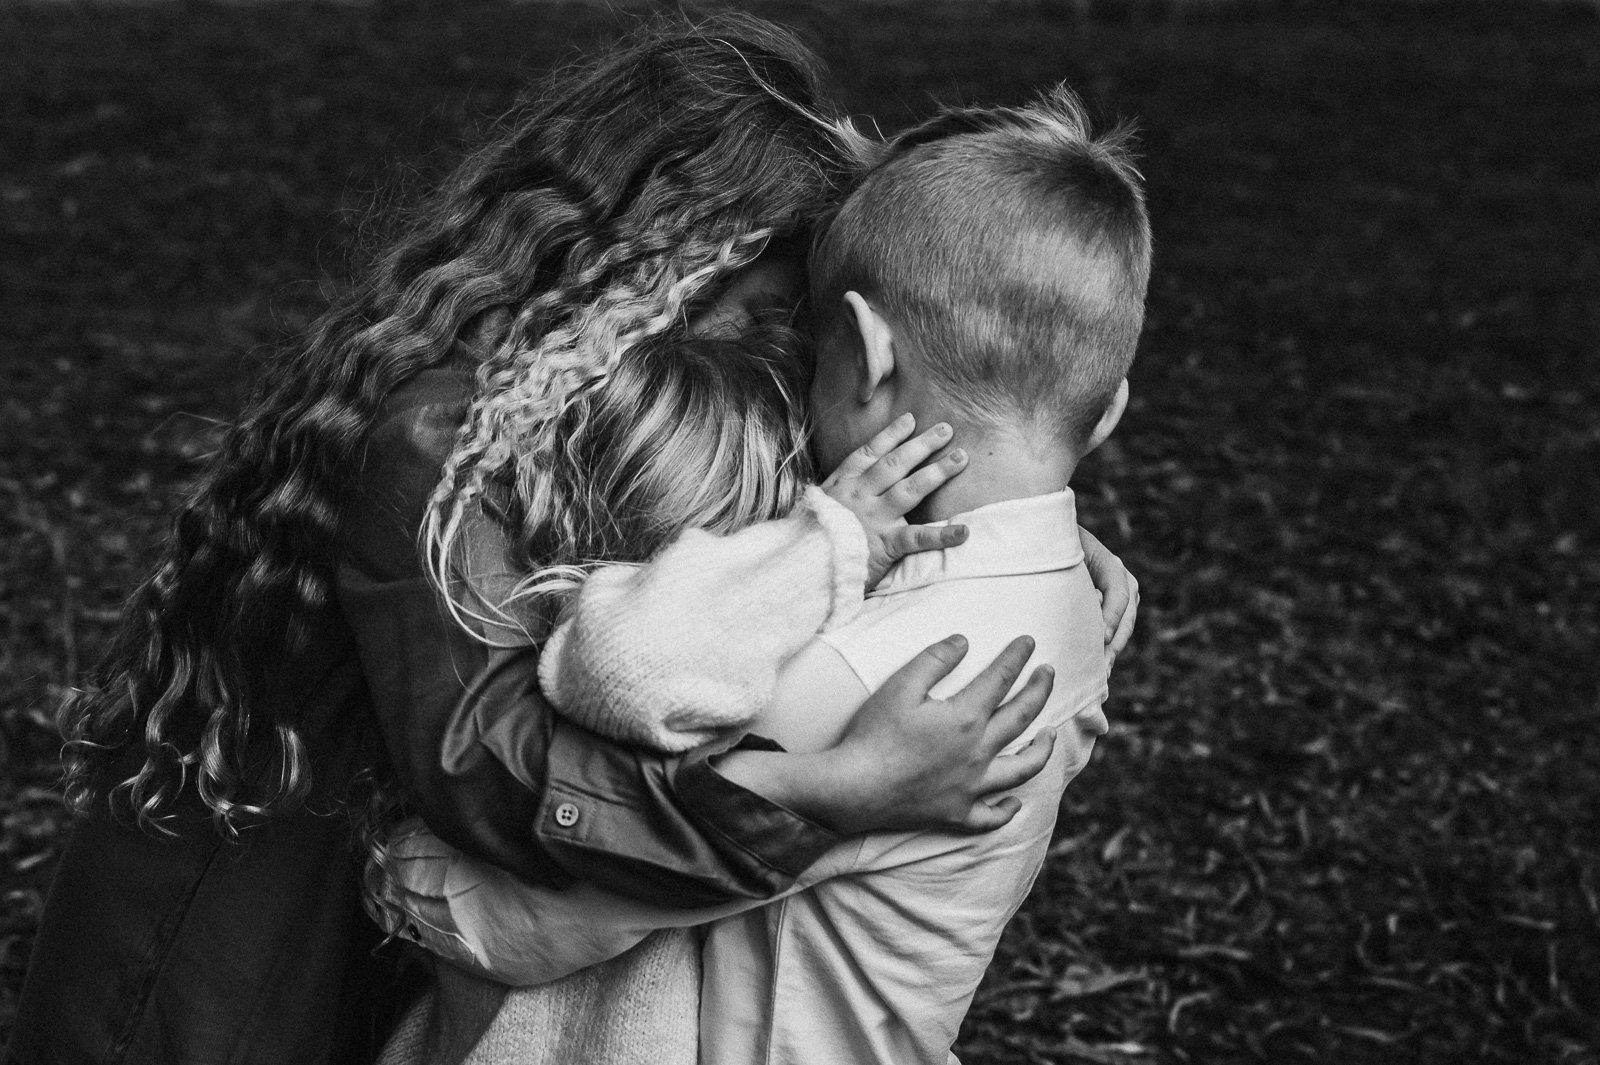 melbourne_family_photographer_together_children_hugging_hands_black_and_white-1.jpg